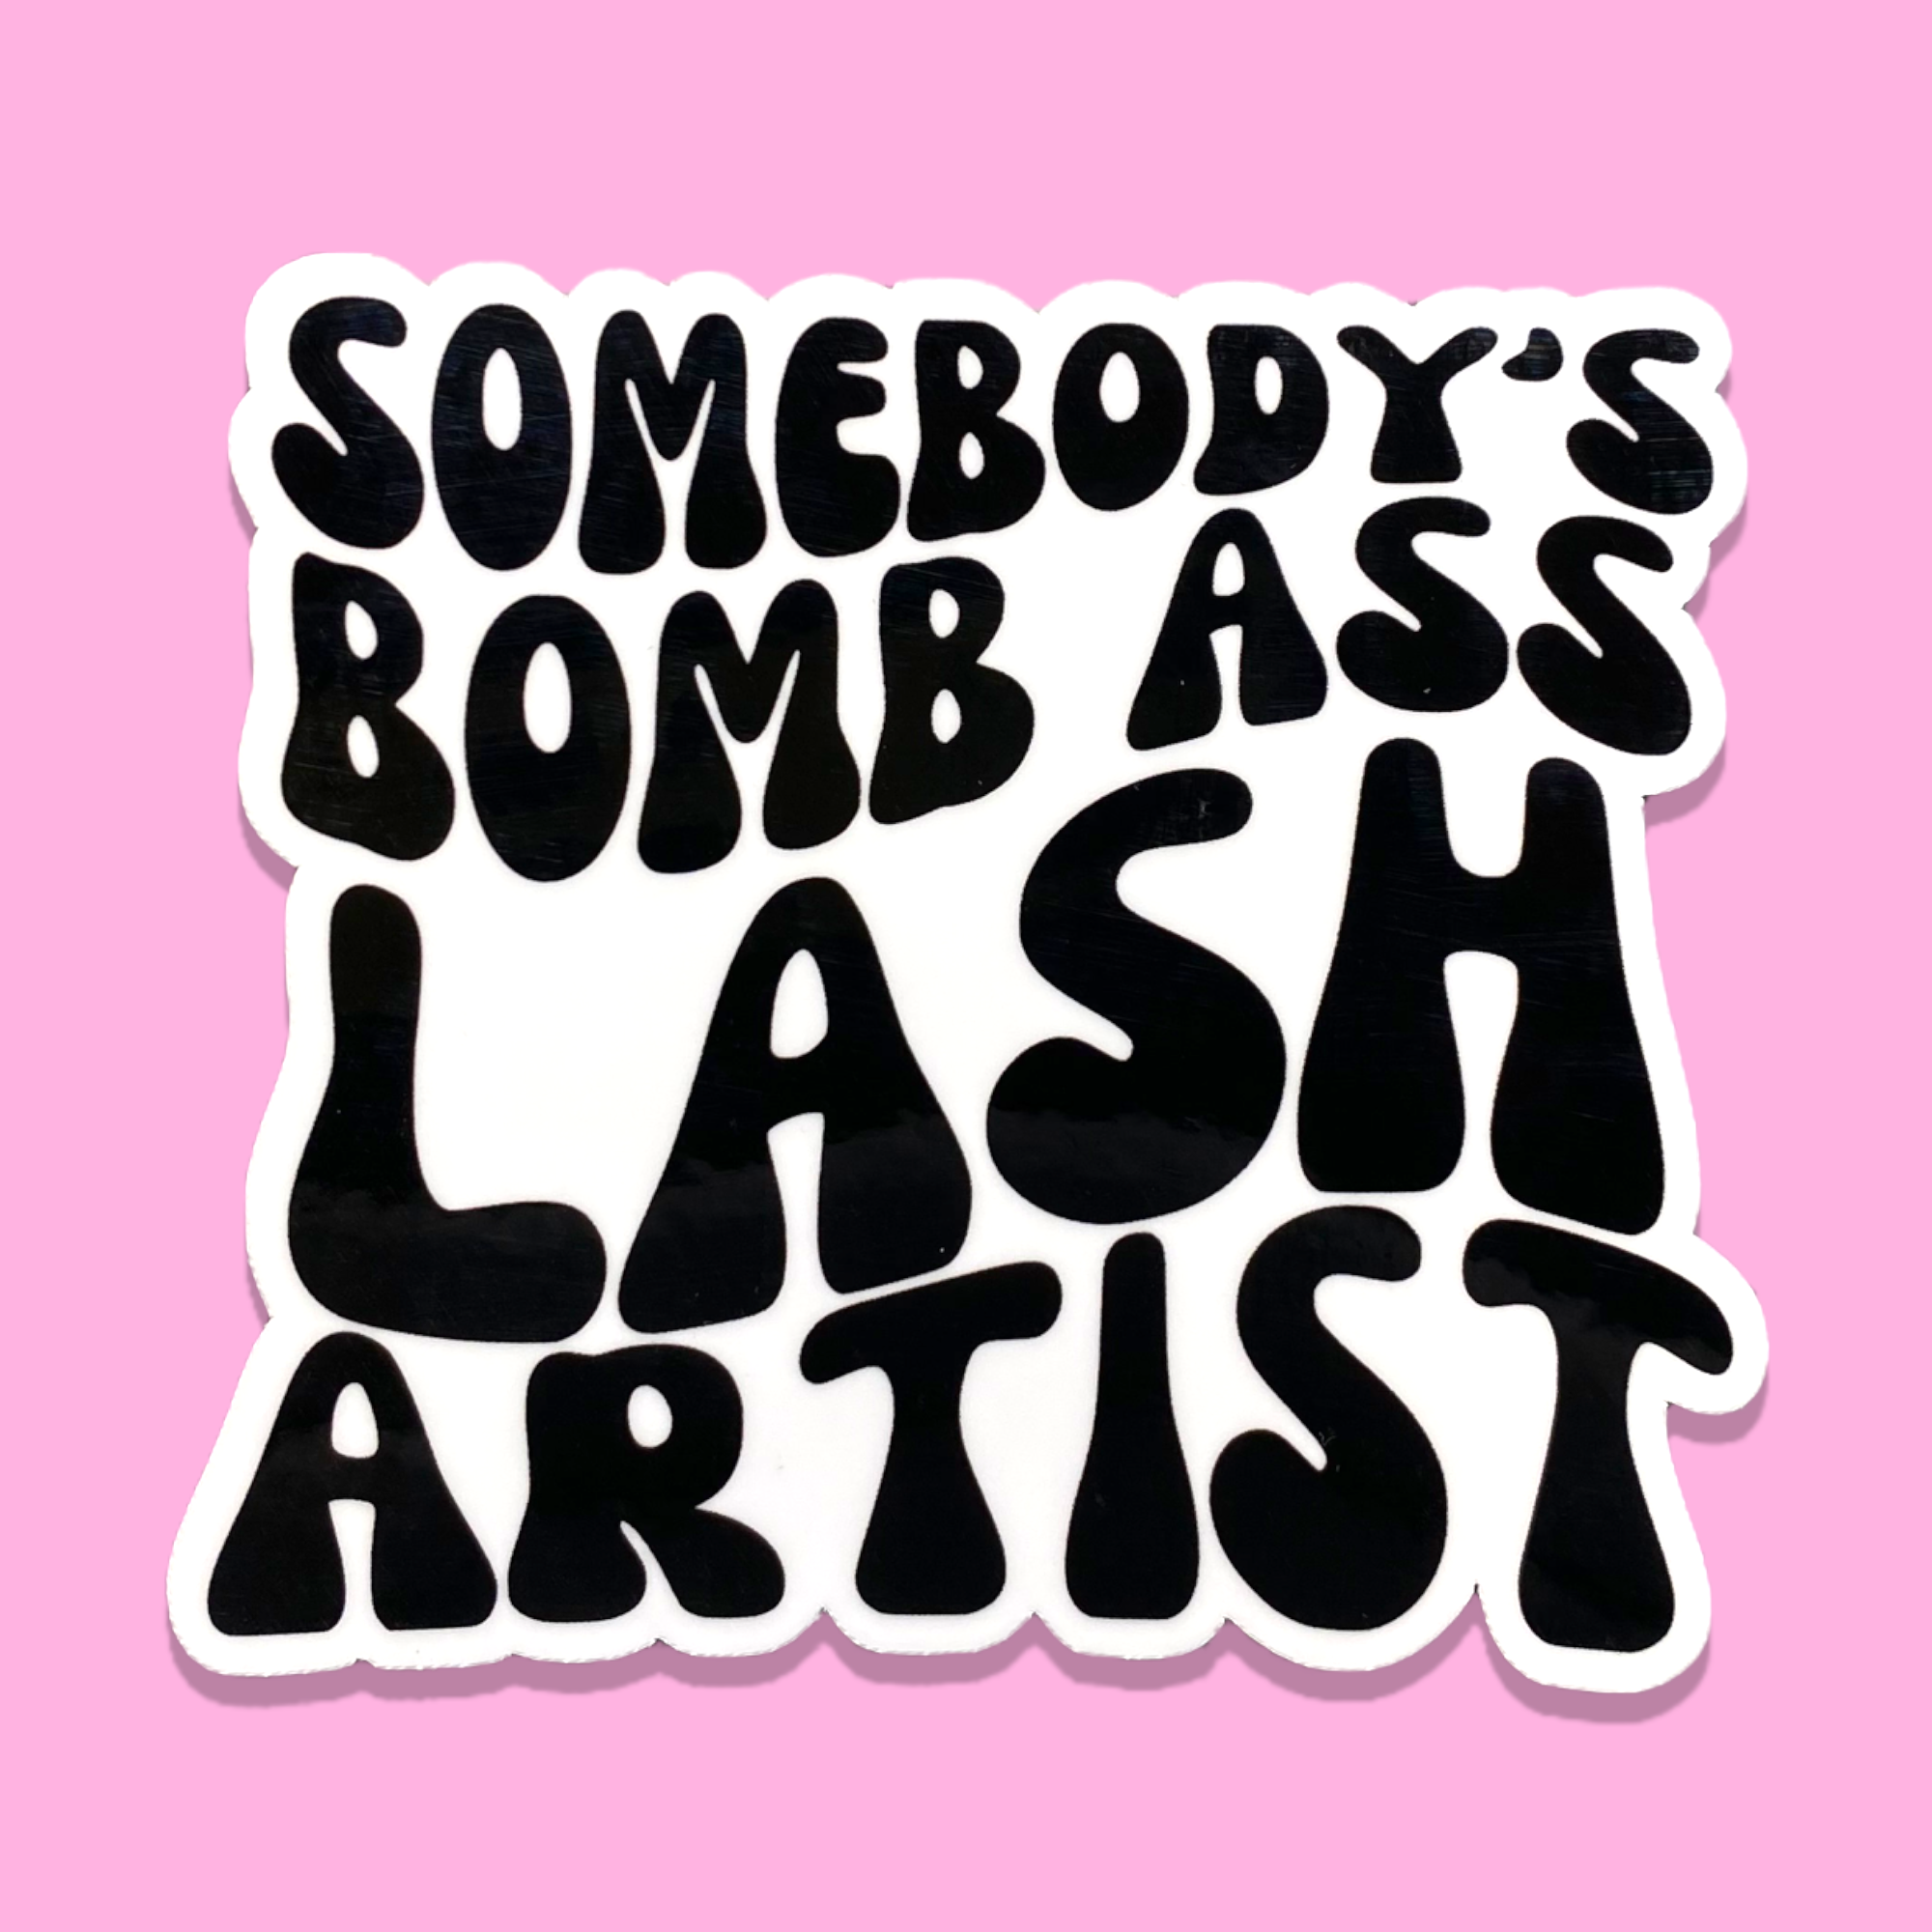 Someone’s Bomb Ass lash artist Glossy Vinyl Sticker Water Bottle Sticker Laptop Sticker Sticker